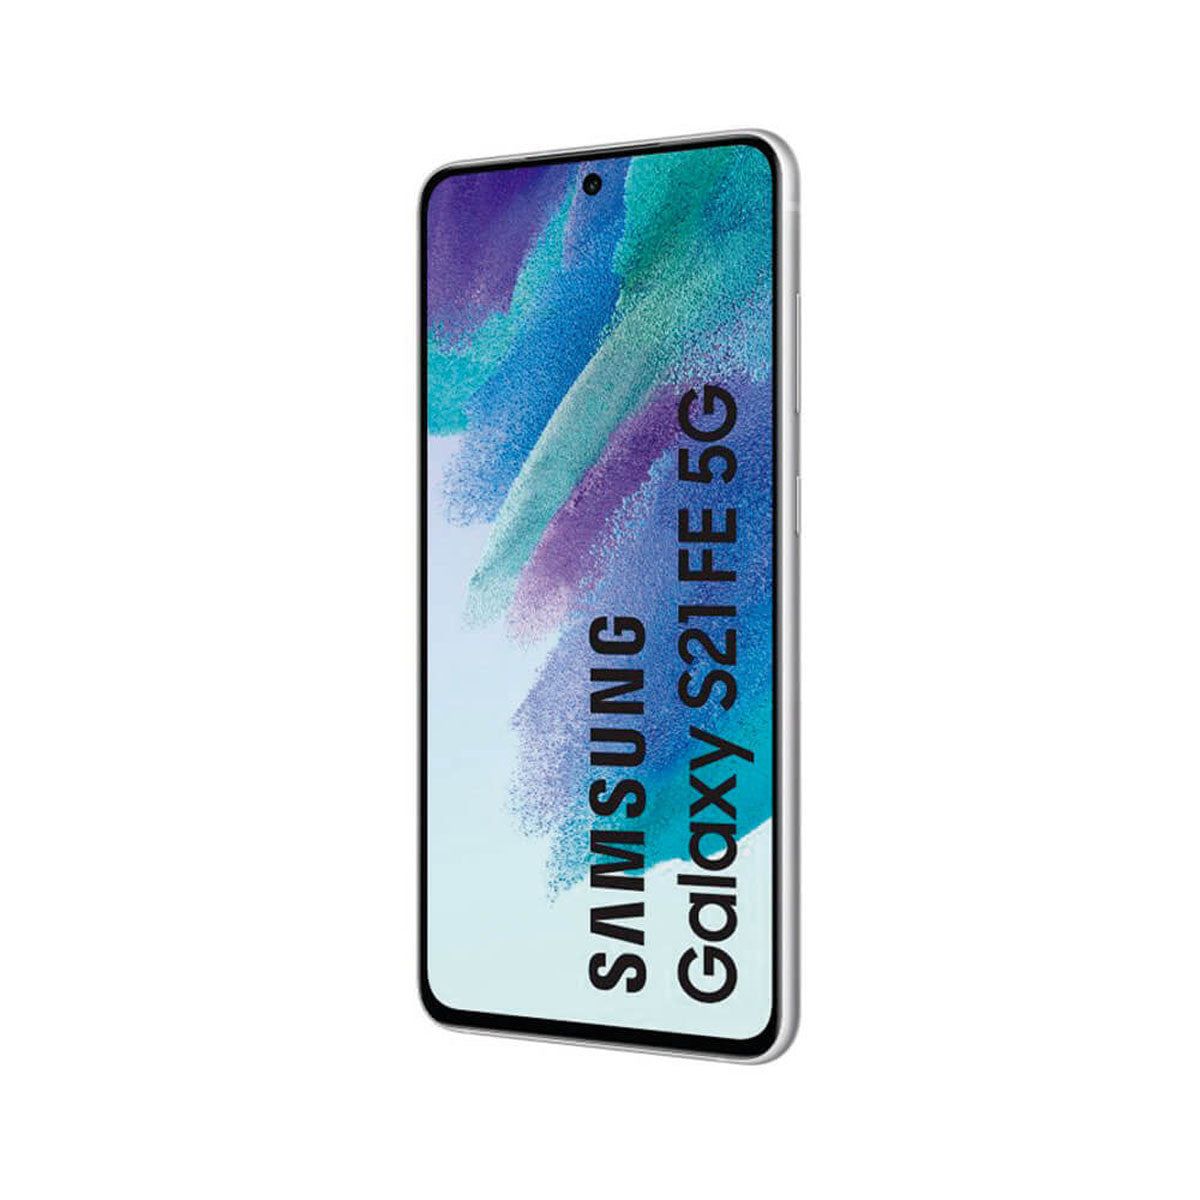 Samsung Galaxy S21 FE 5G 8GB/256GB Blanco (White) Dual SIM G990 Smartphone | Samsung